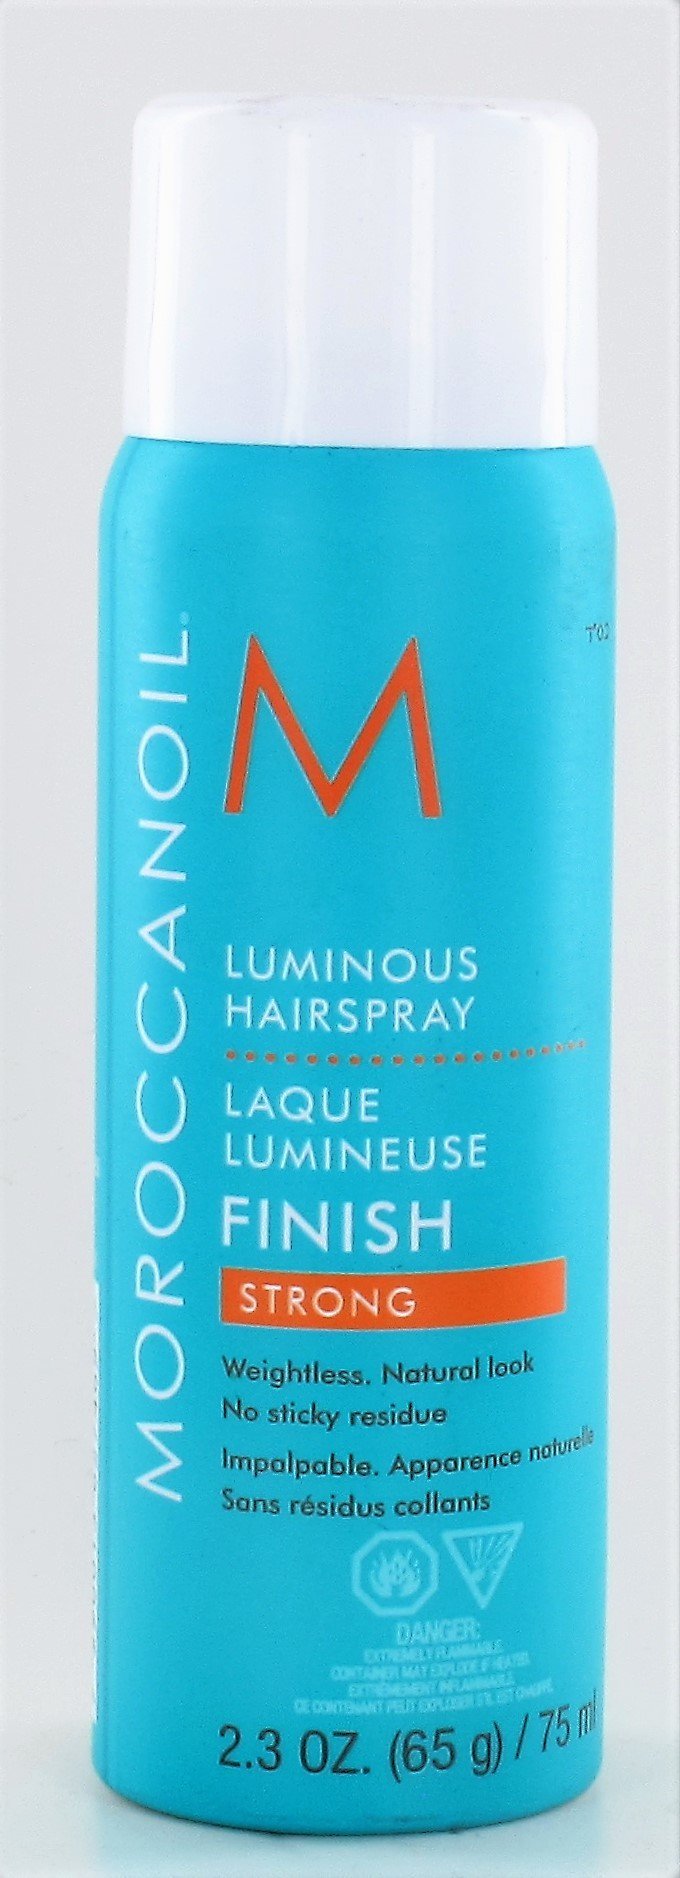 MoroccanOil Finish Strong Luminous Hairspray 2.3 oz Travel Size